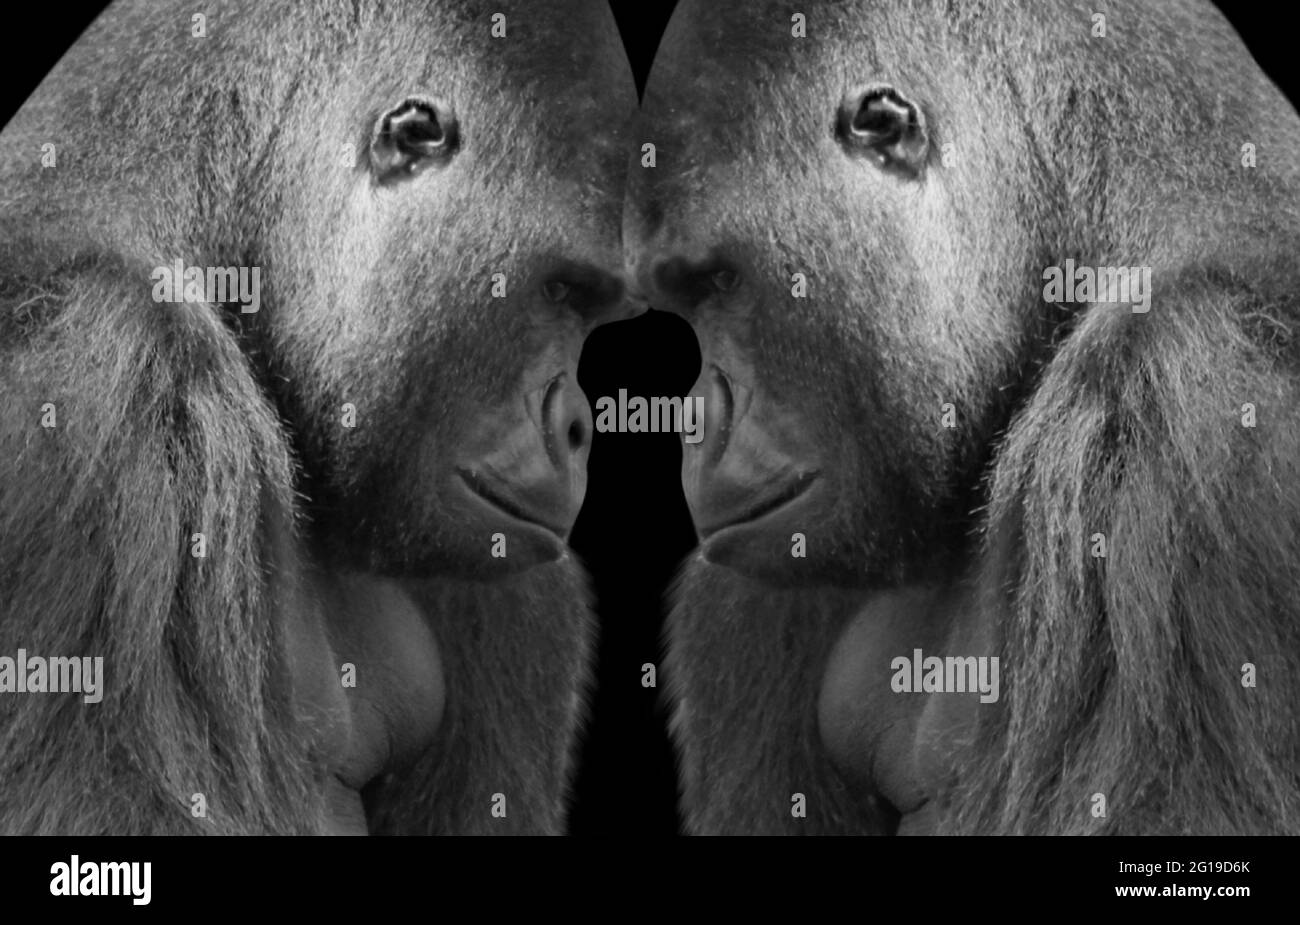 Two Big Gorilla Closeup Face In Black Background Stock Photo